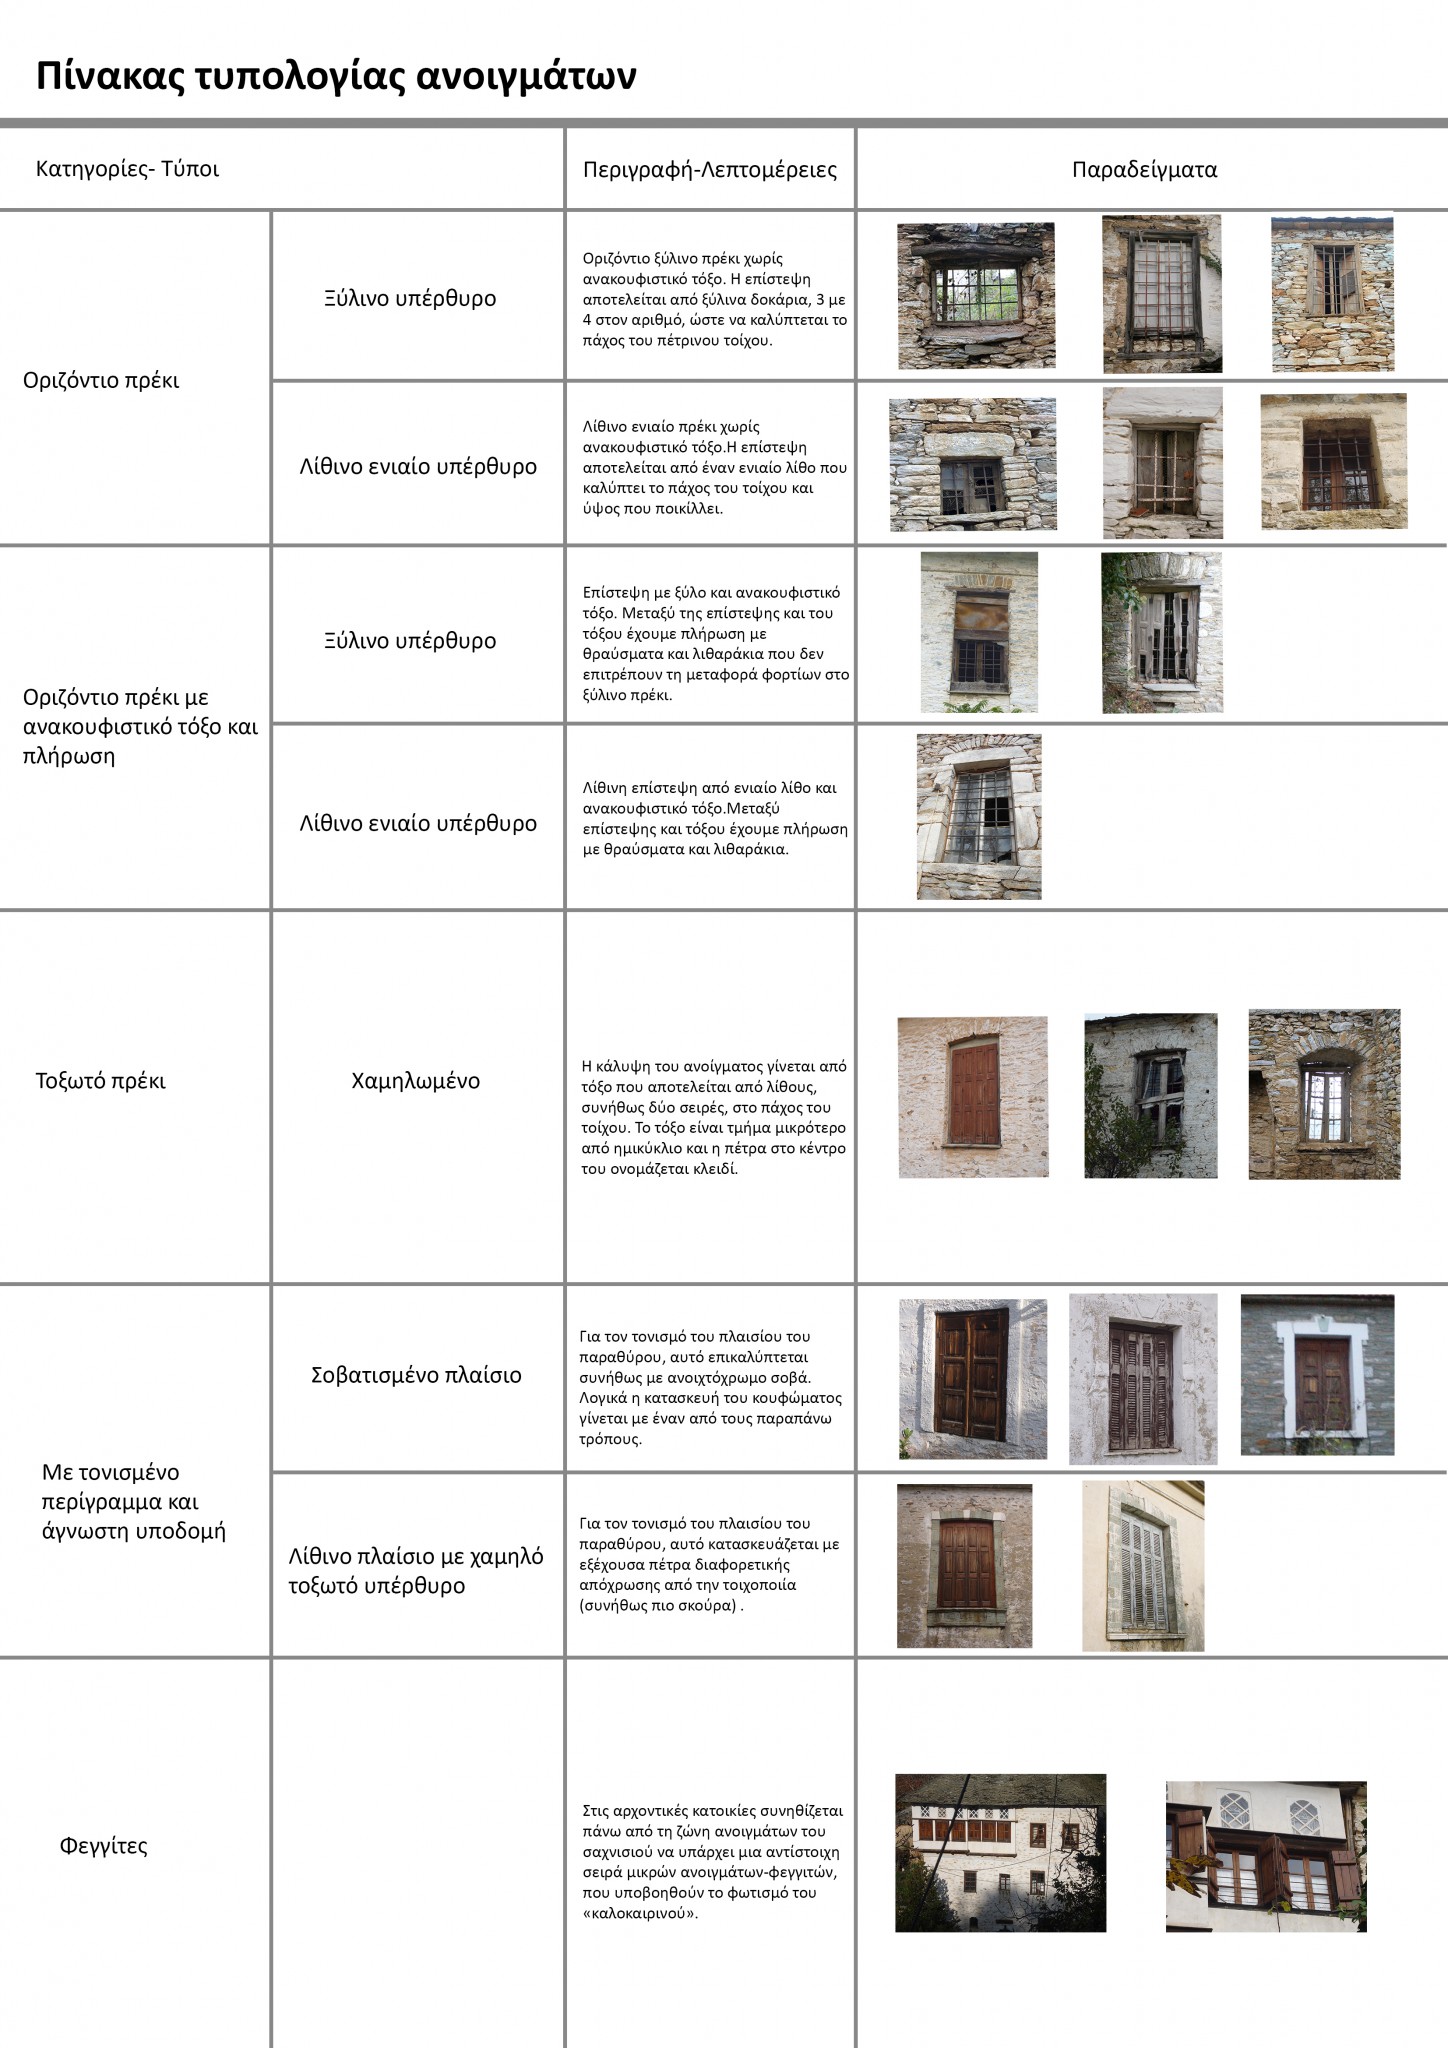 Sticky Soak Greengrocer Τυπολογία παραθύρων | Αρχιτεκτονική Ανάλυση Παραδοσιακών Κτηρίων και Συνόλων